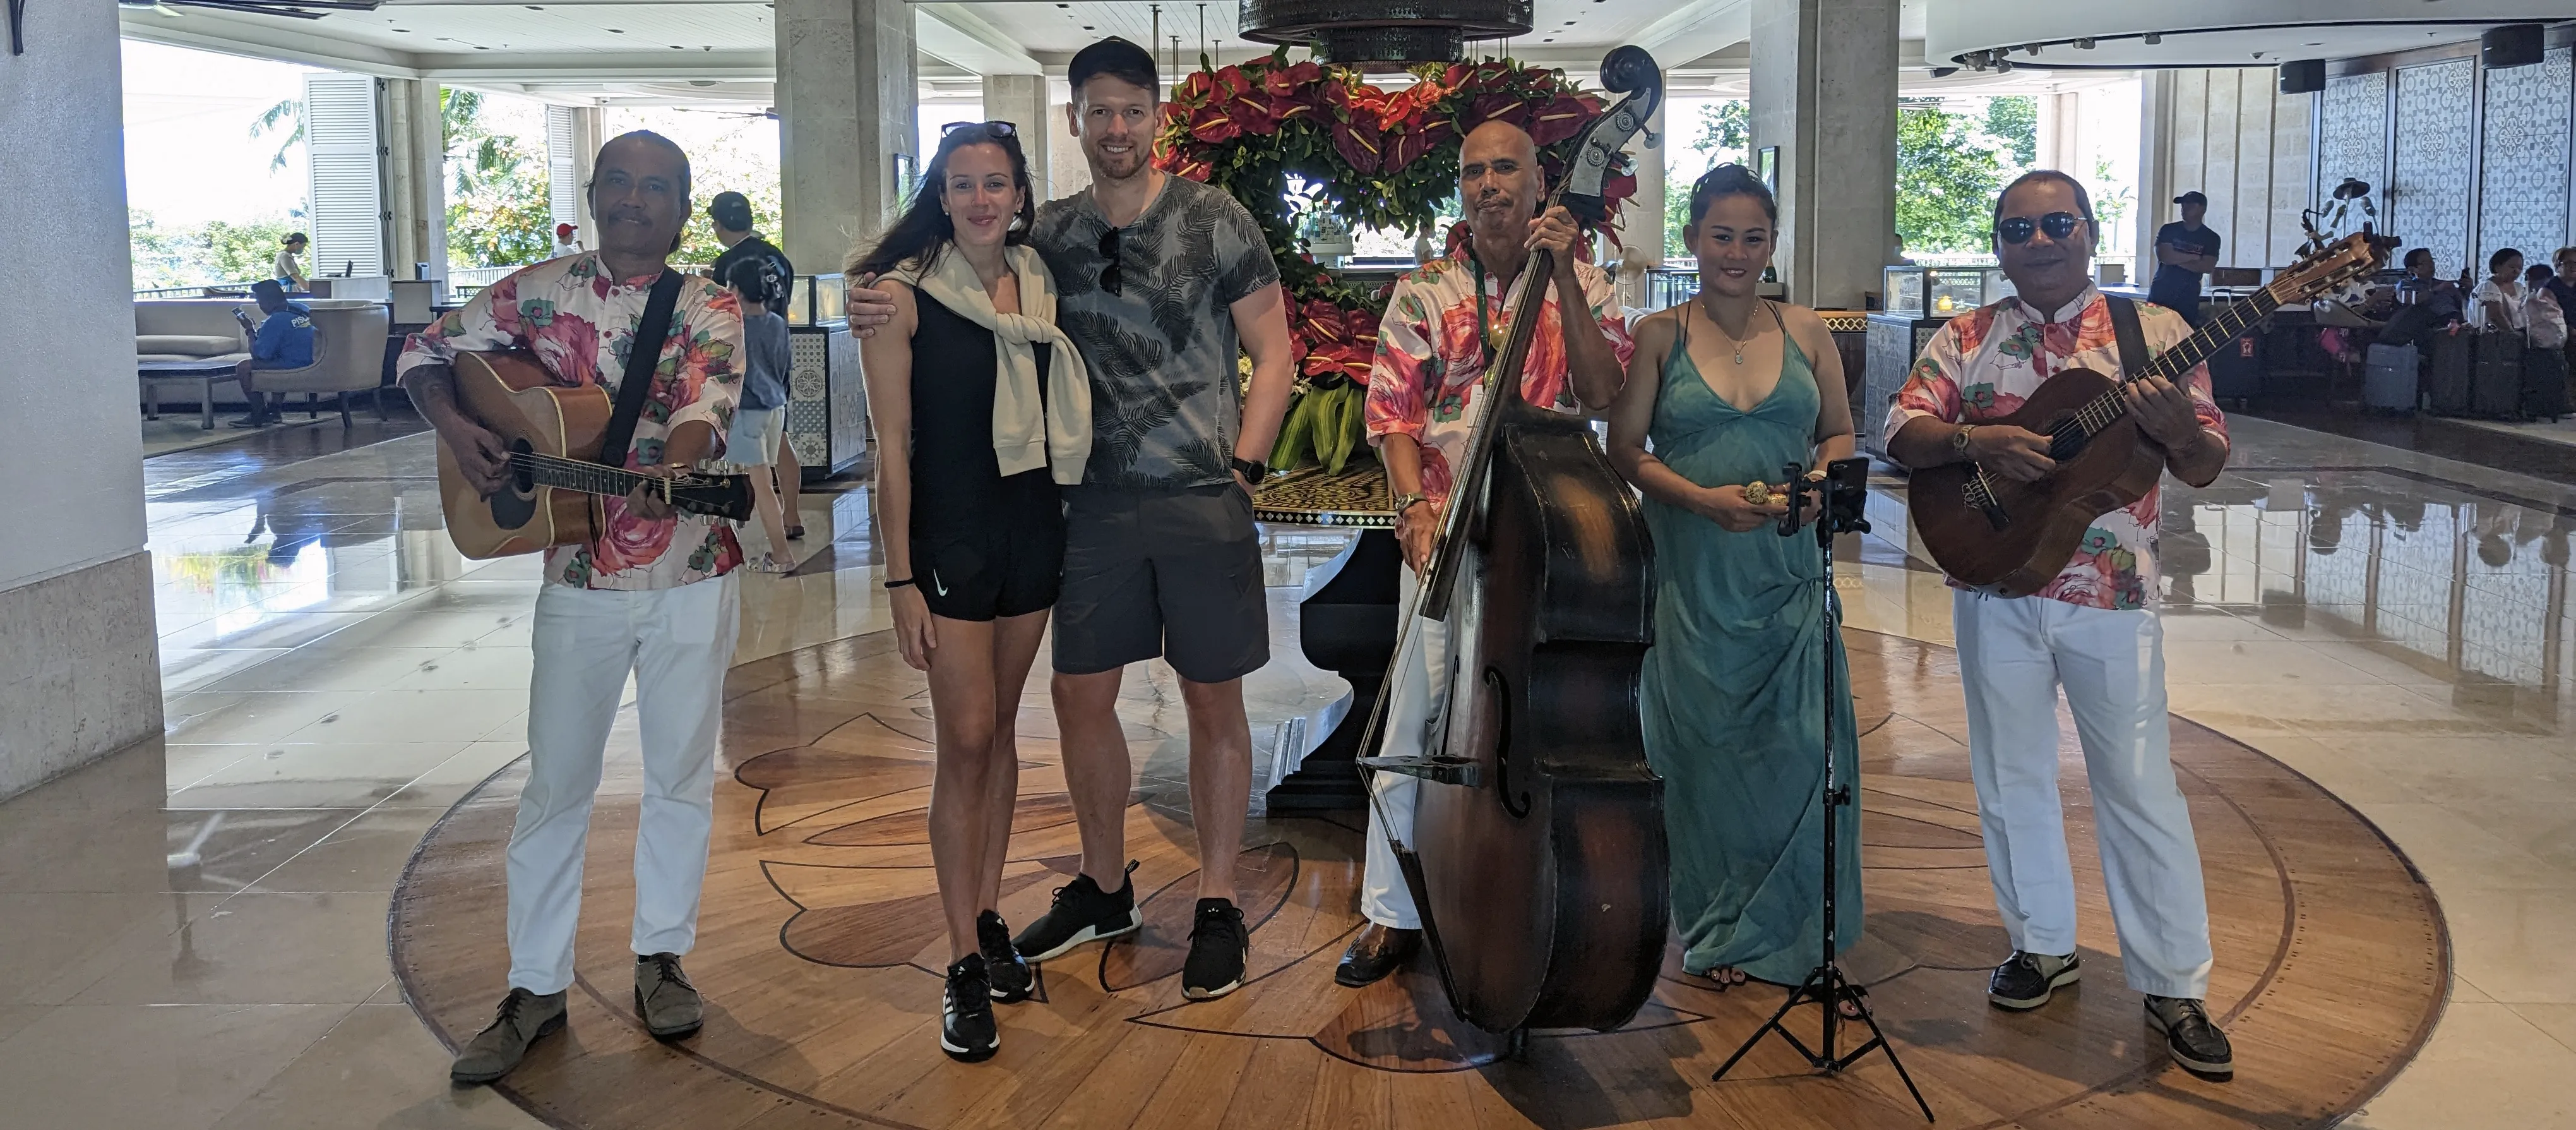 Shangri-La Lobby with Musicians